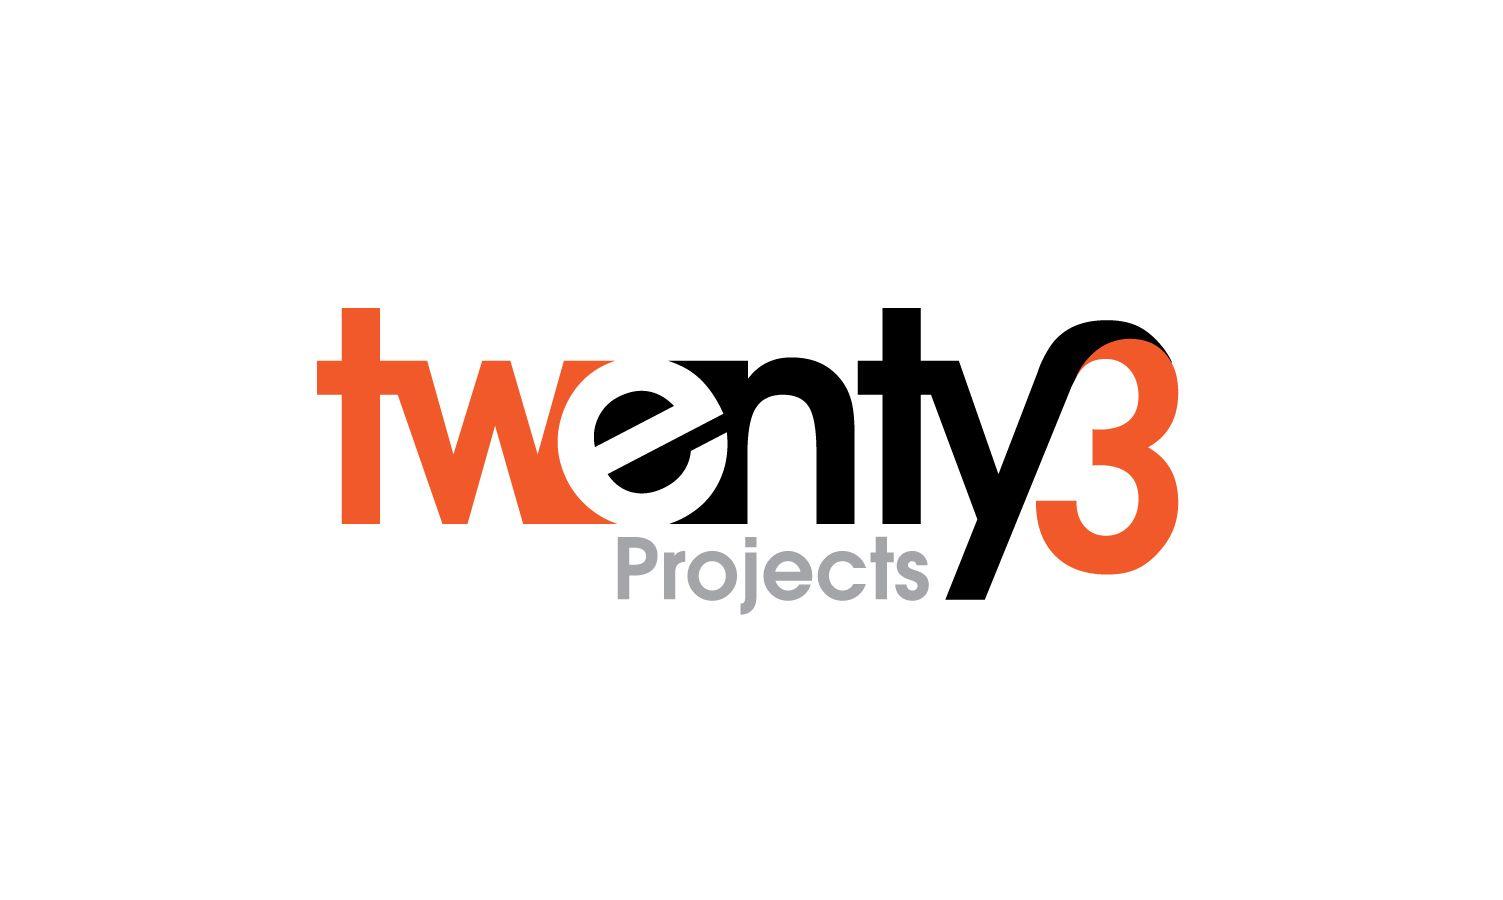 Twenty Logo - Elegant, Playful, Construction Logo Design for Twentythree projects